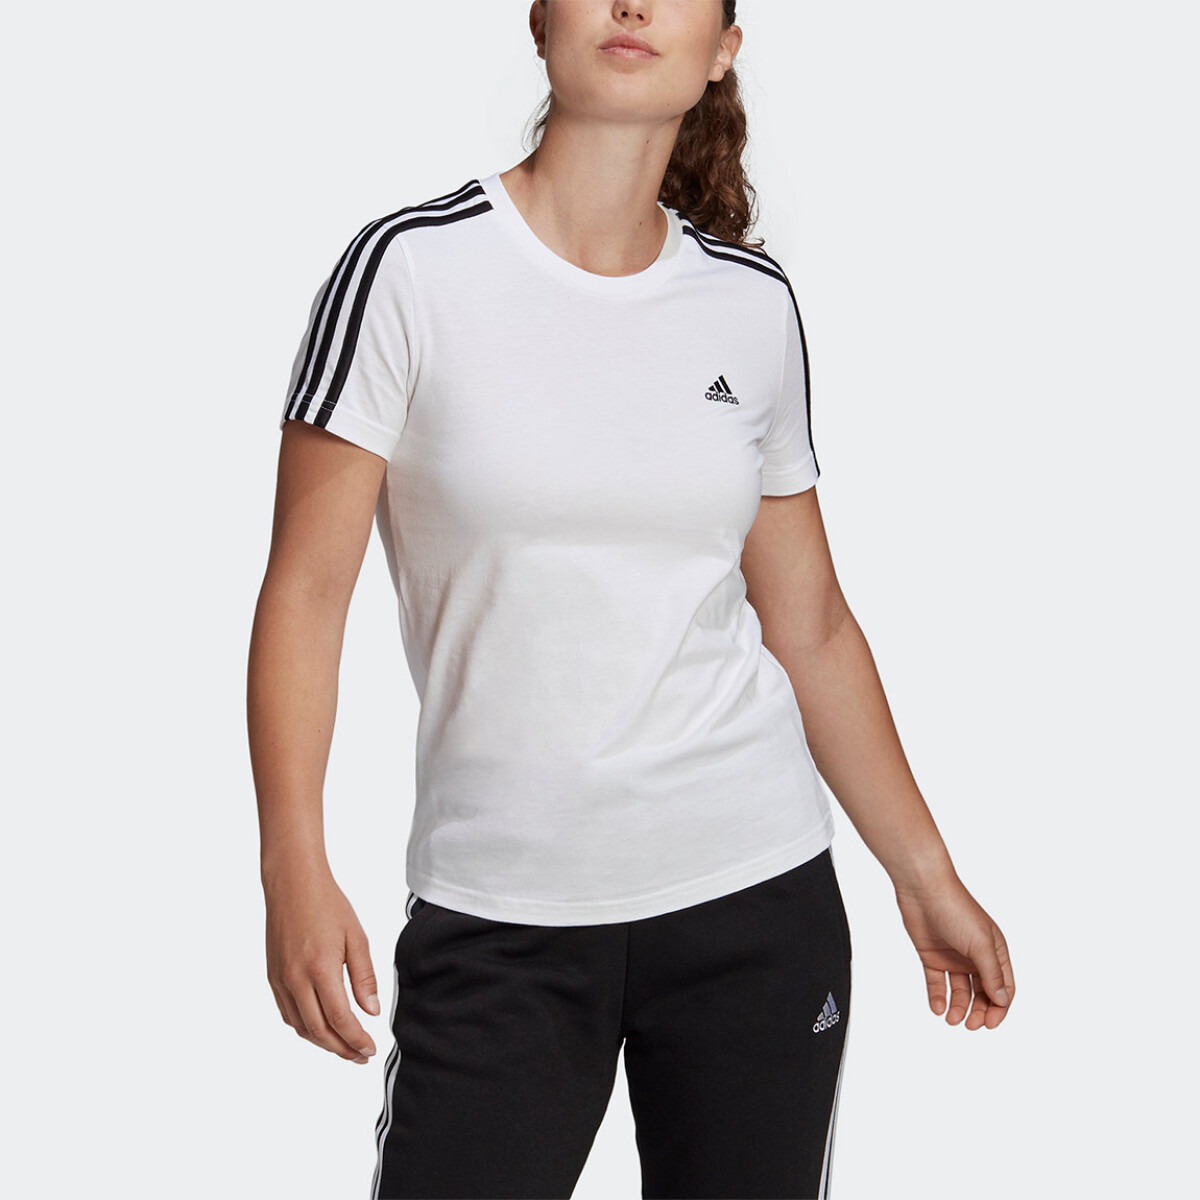 Adidas W 3s T White/black - Blanco-negro 